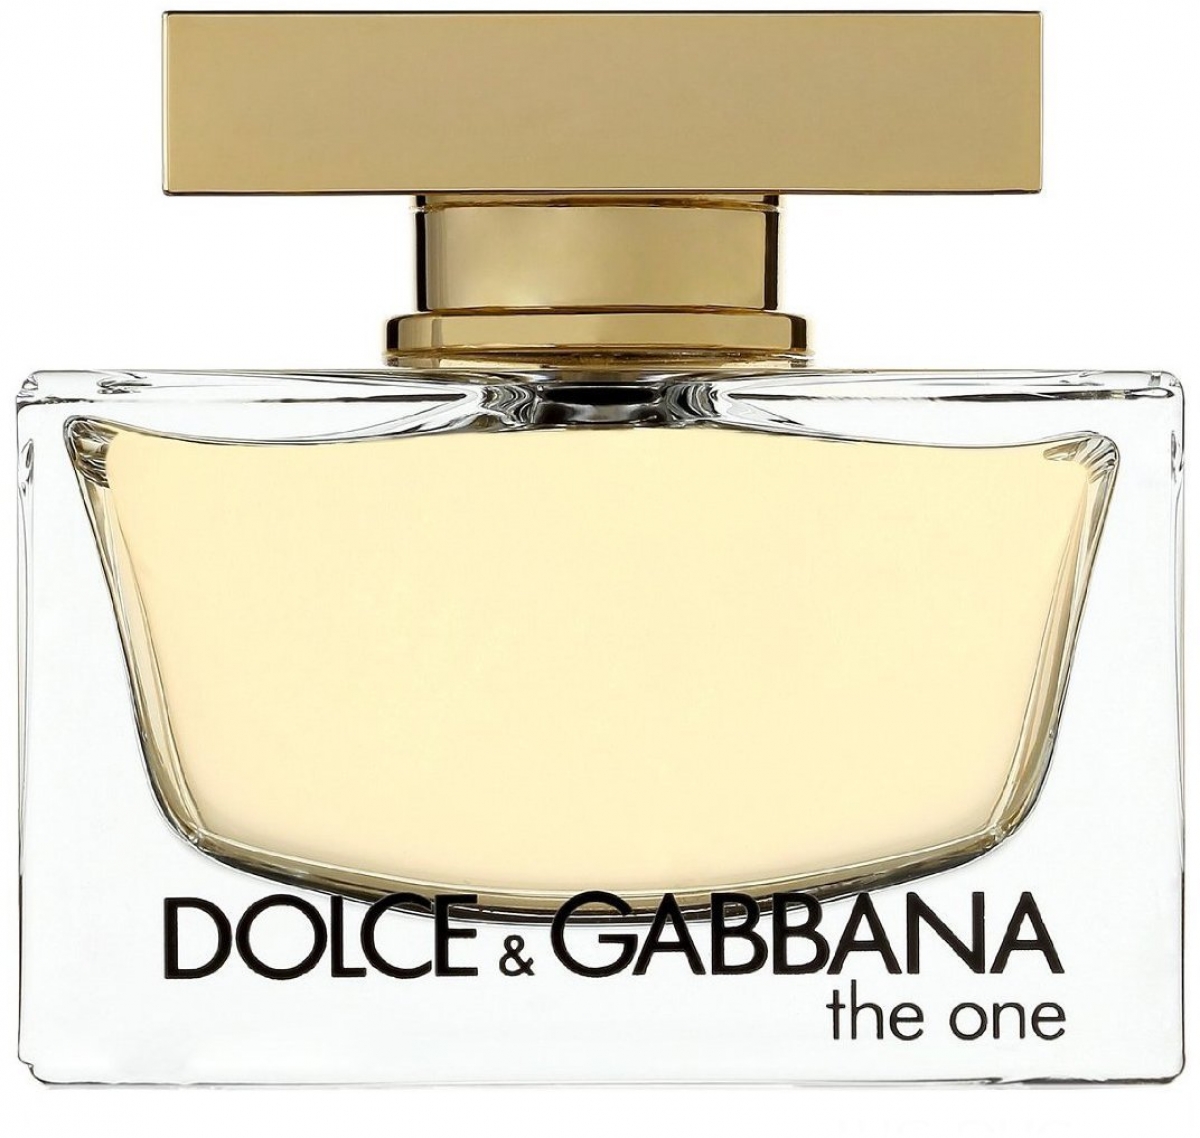 Дольче габбана the one купить. Dolce & Gabbana the one, EDP. Dolce&Gabbana the one 50. Dolce Gabbana the one 50ml. Dolce & Gabbana the one (w) EDP 50ml.